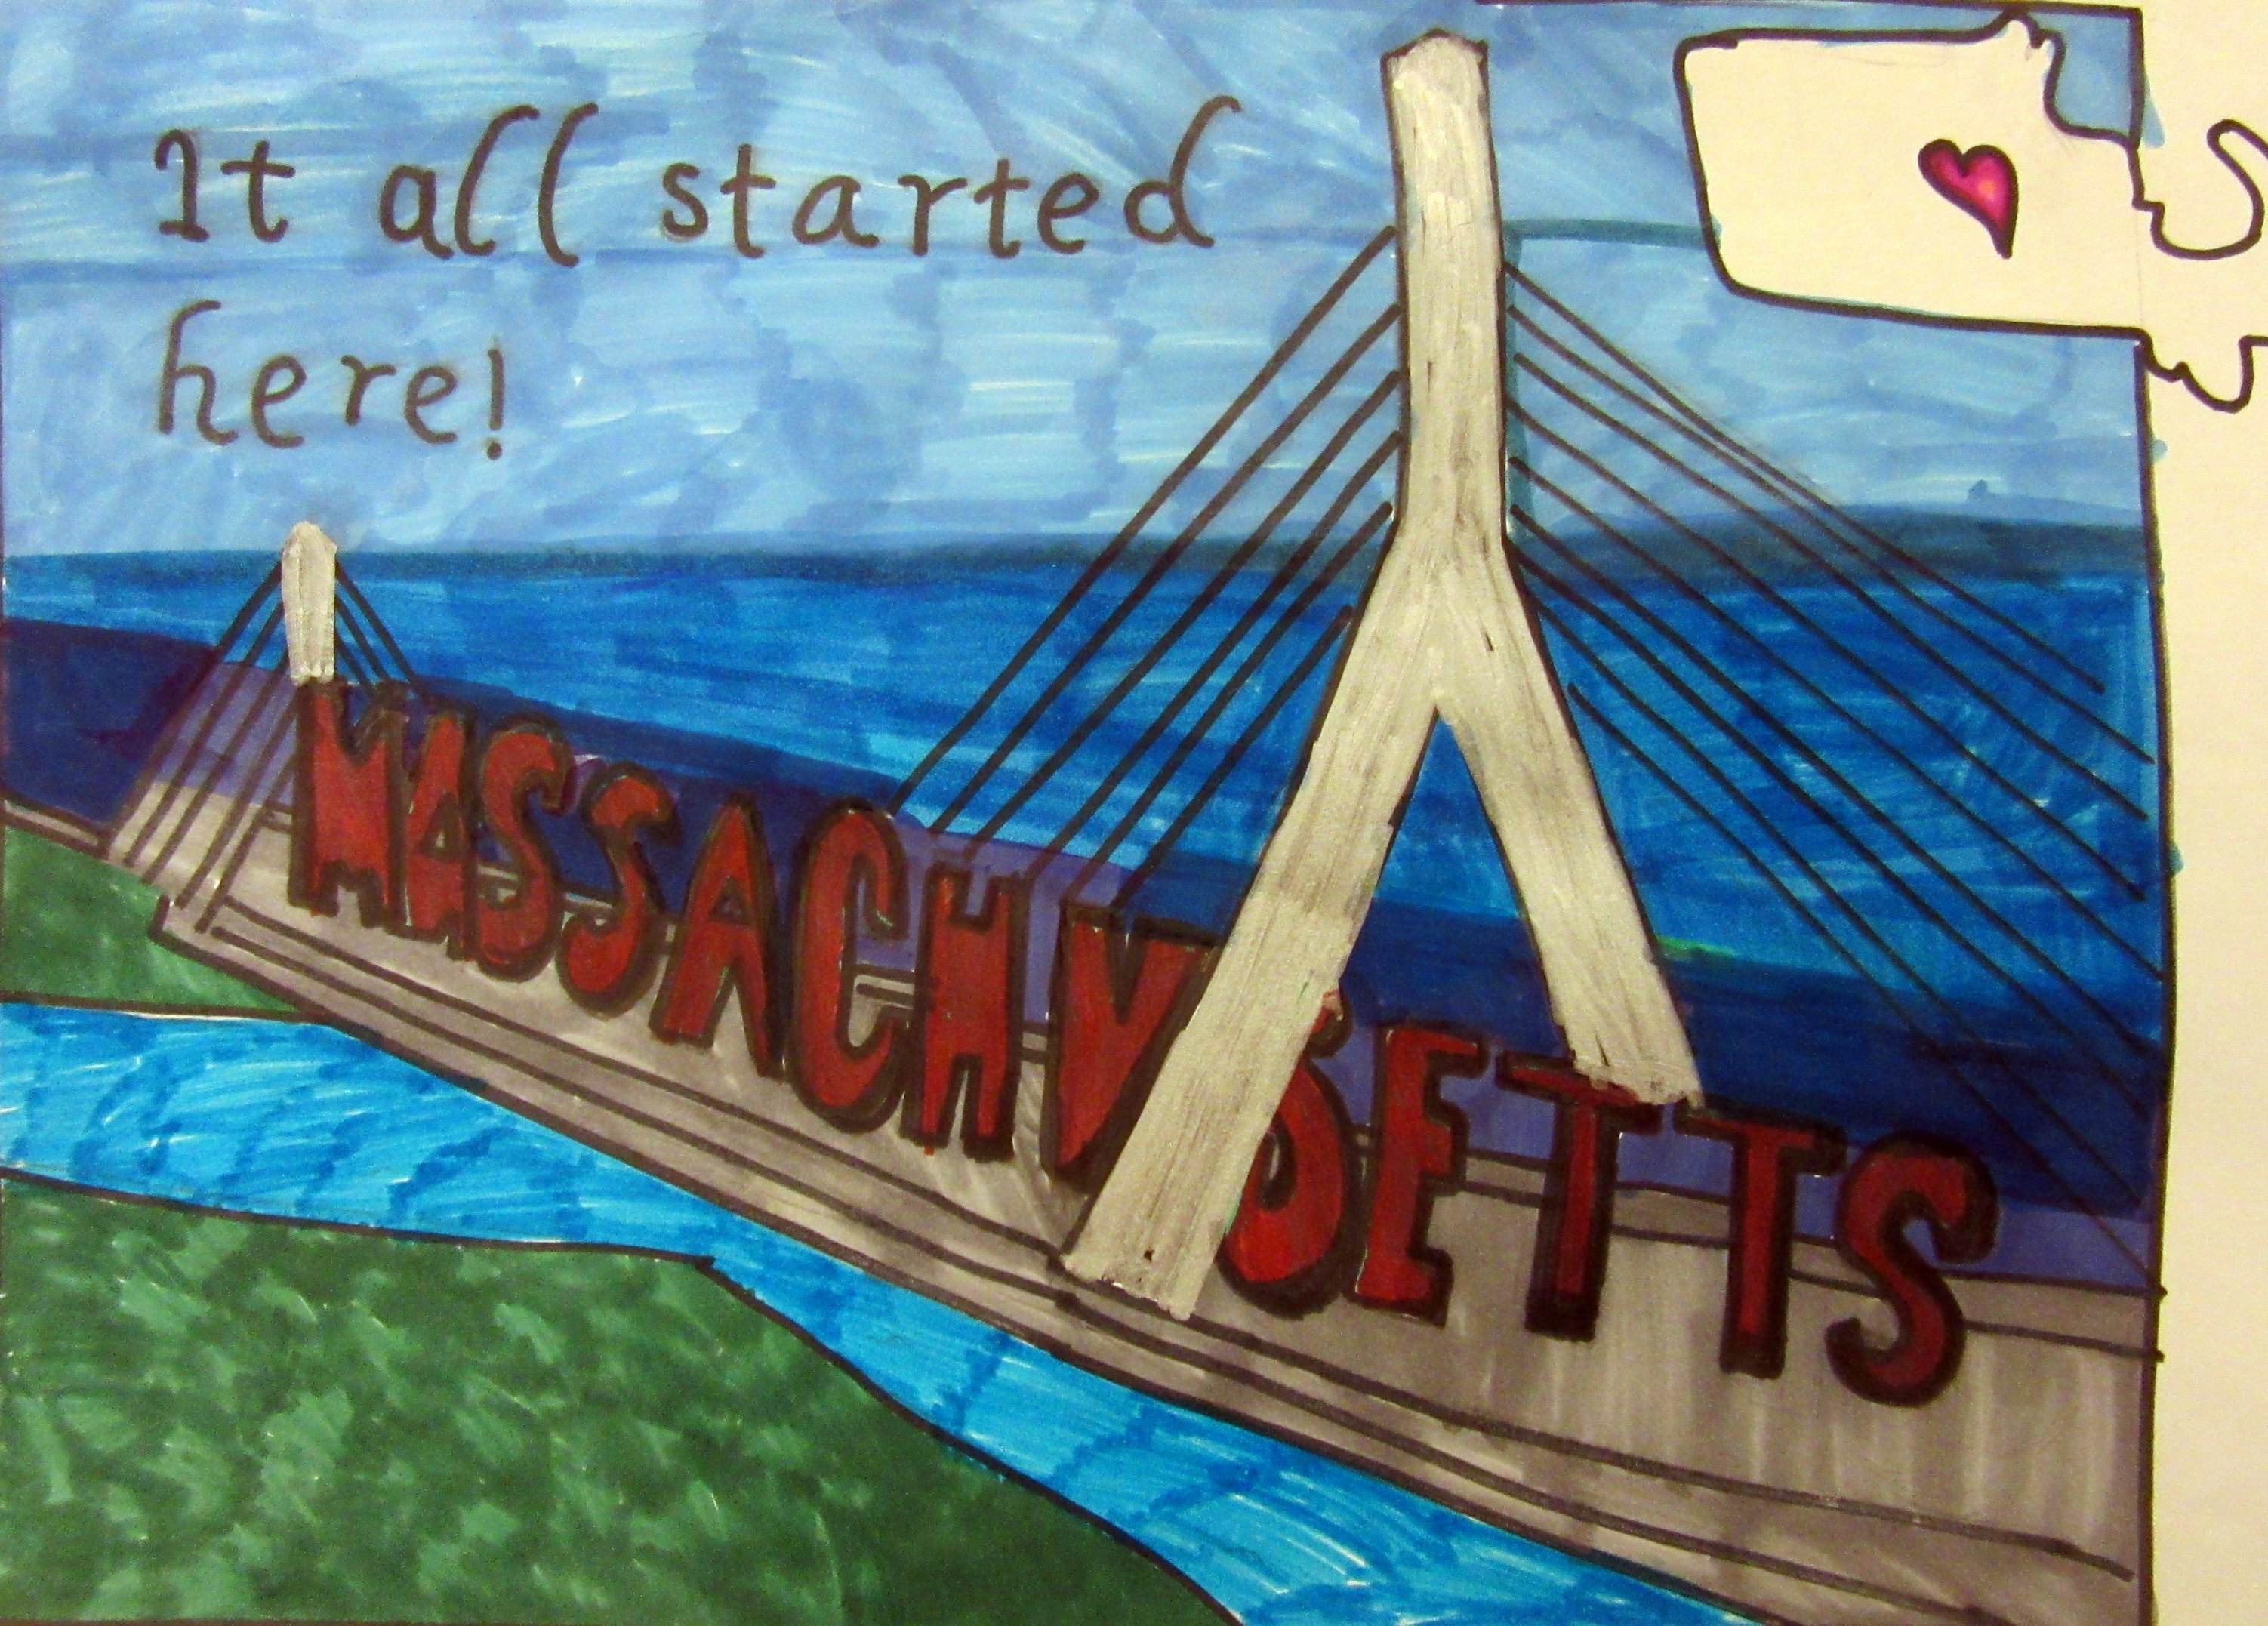 Youth Art Month Flag Contest Massachusetts Art Education Association